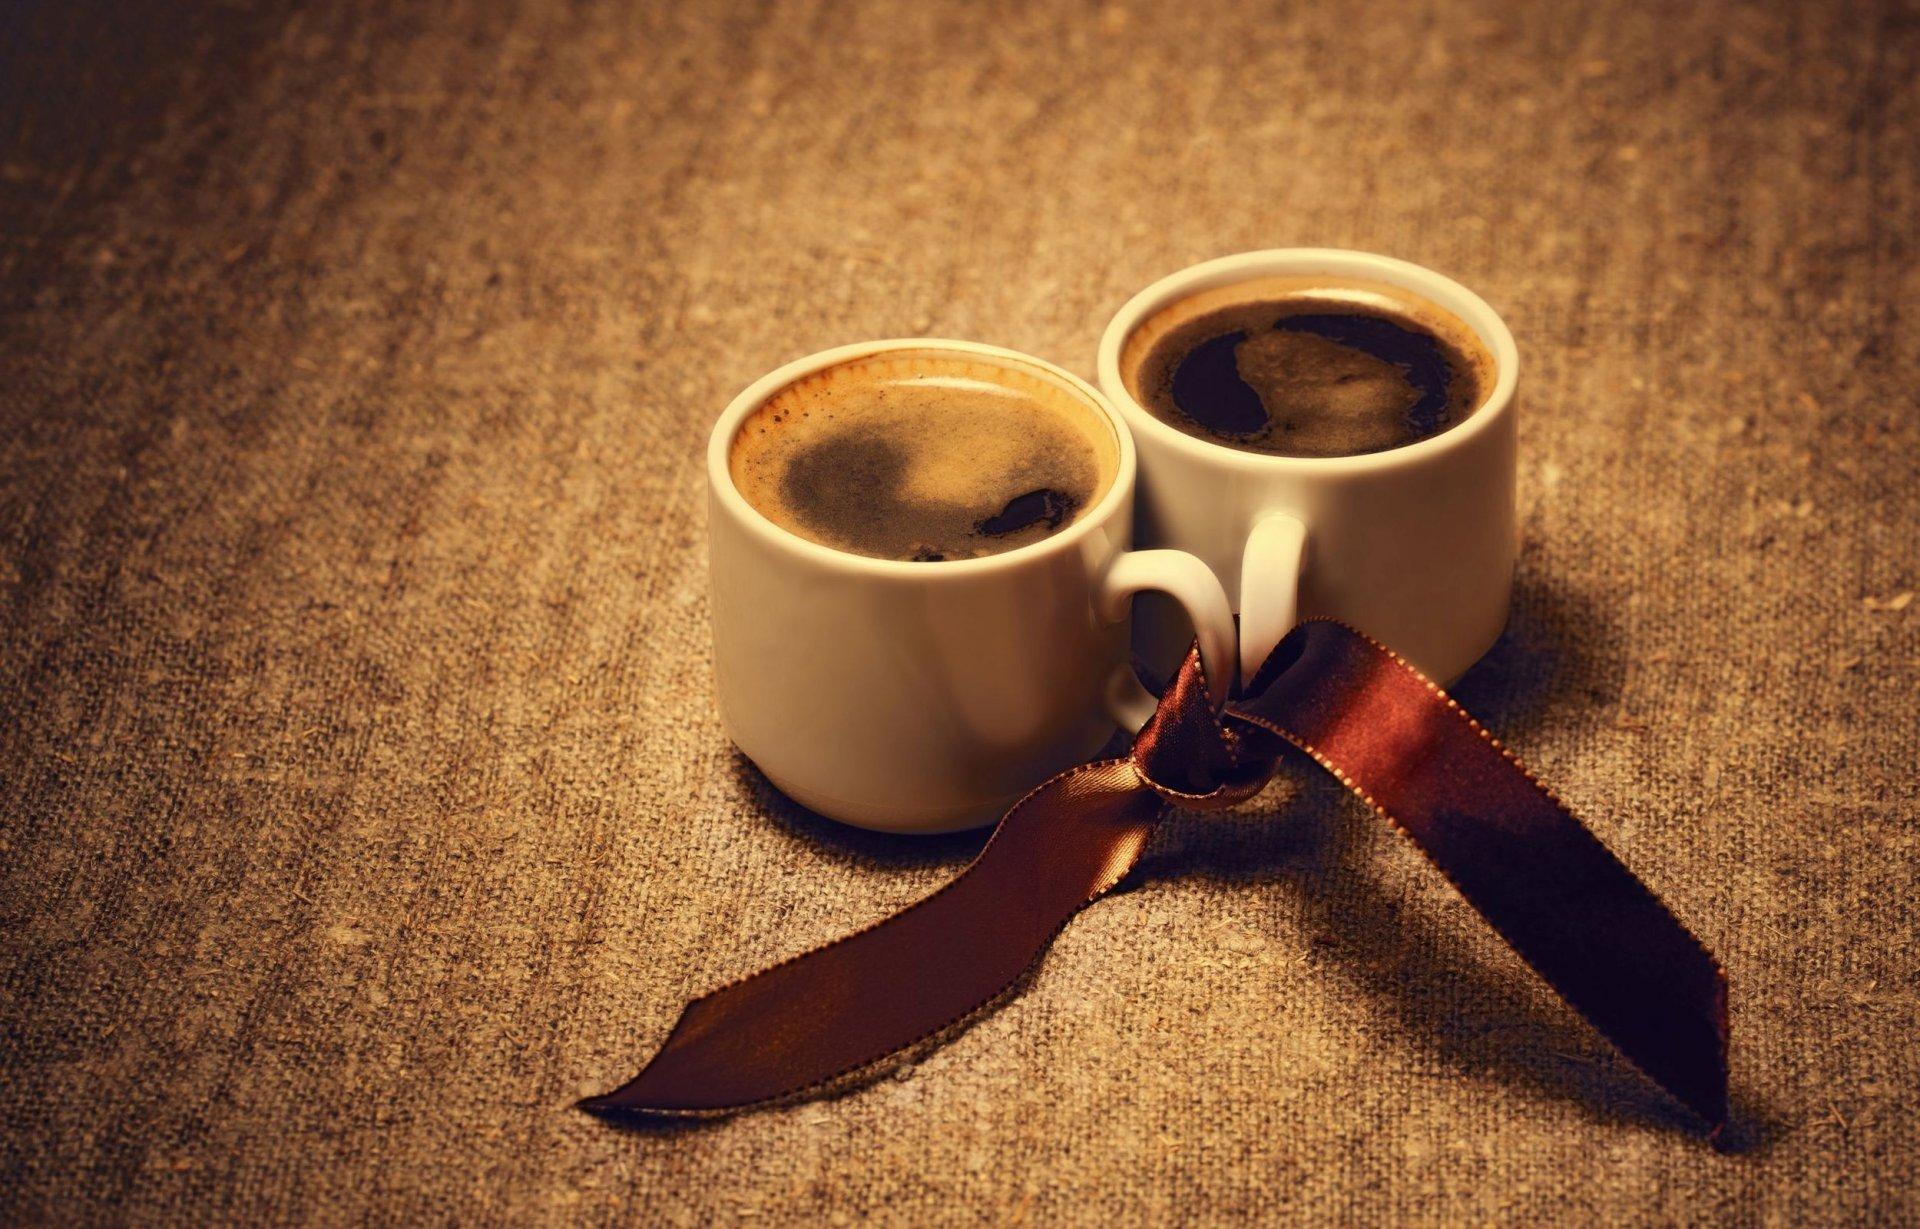 mood cups cup mugs mug tea coffee drink the pair belt ribbon